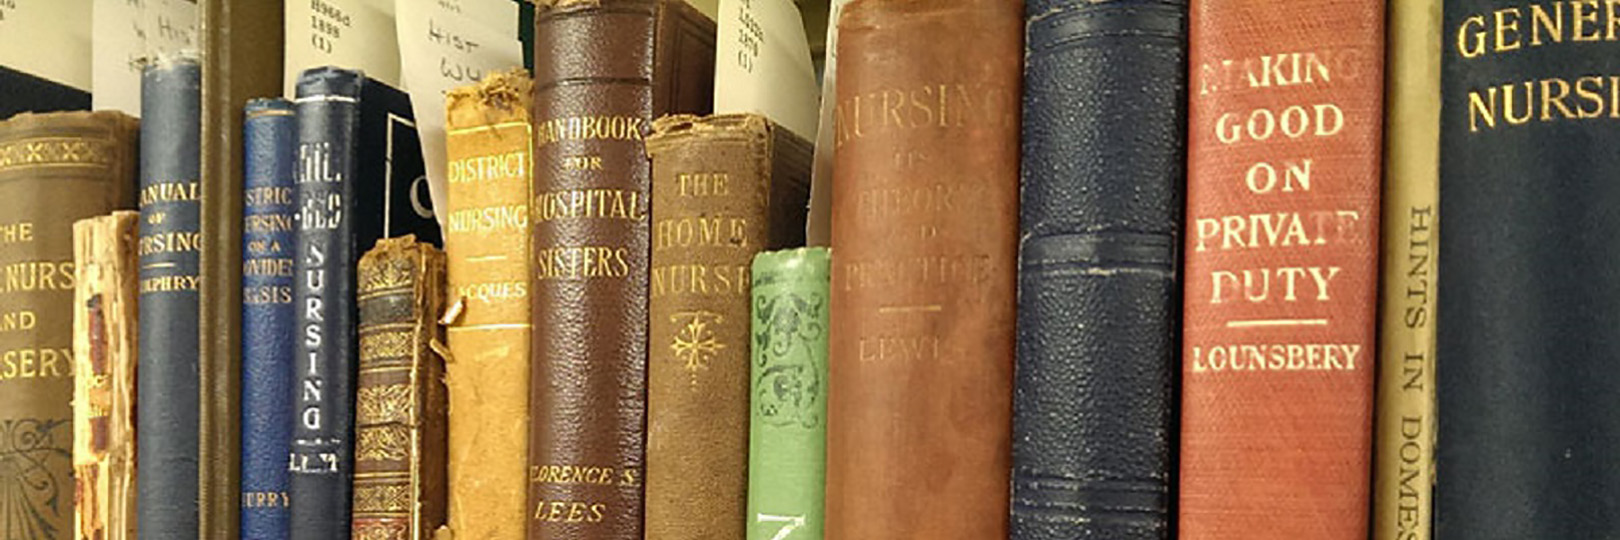 row of old nursing books